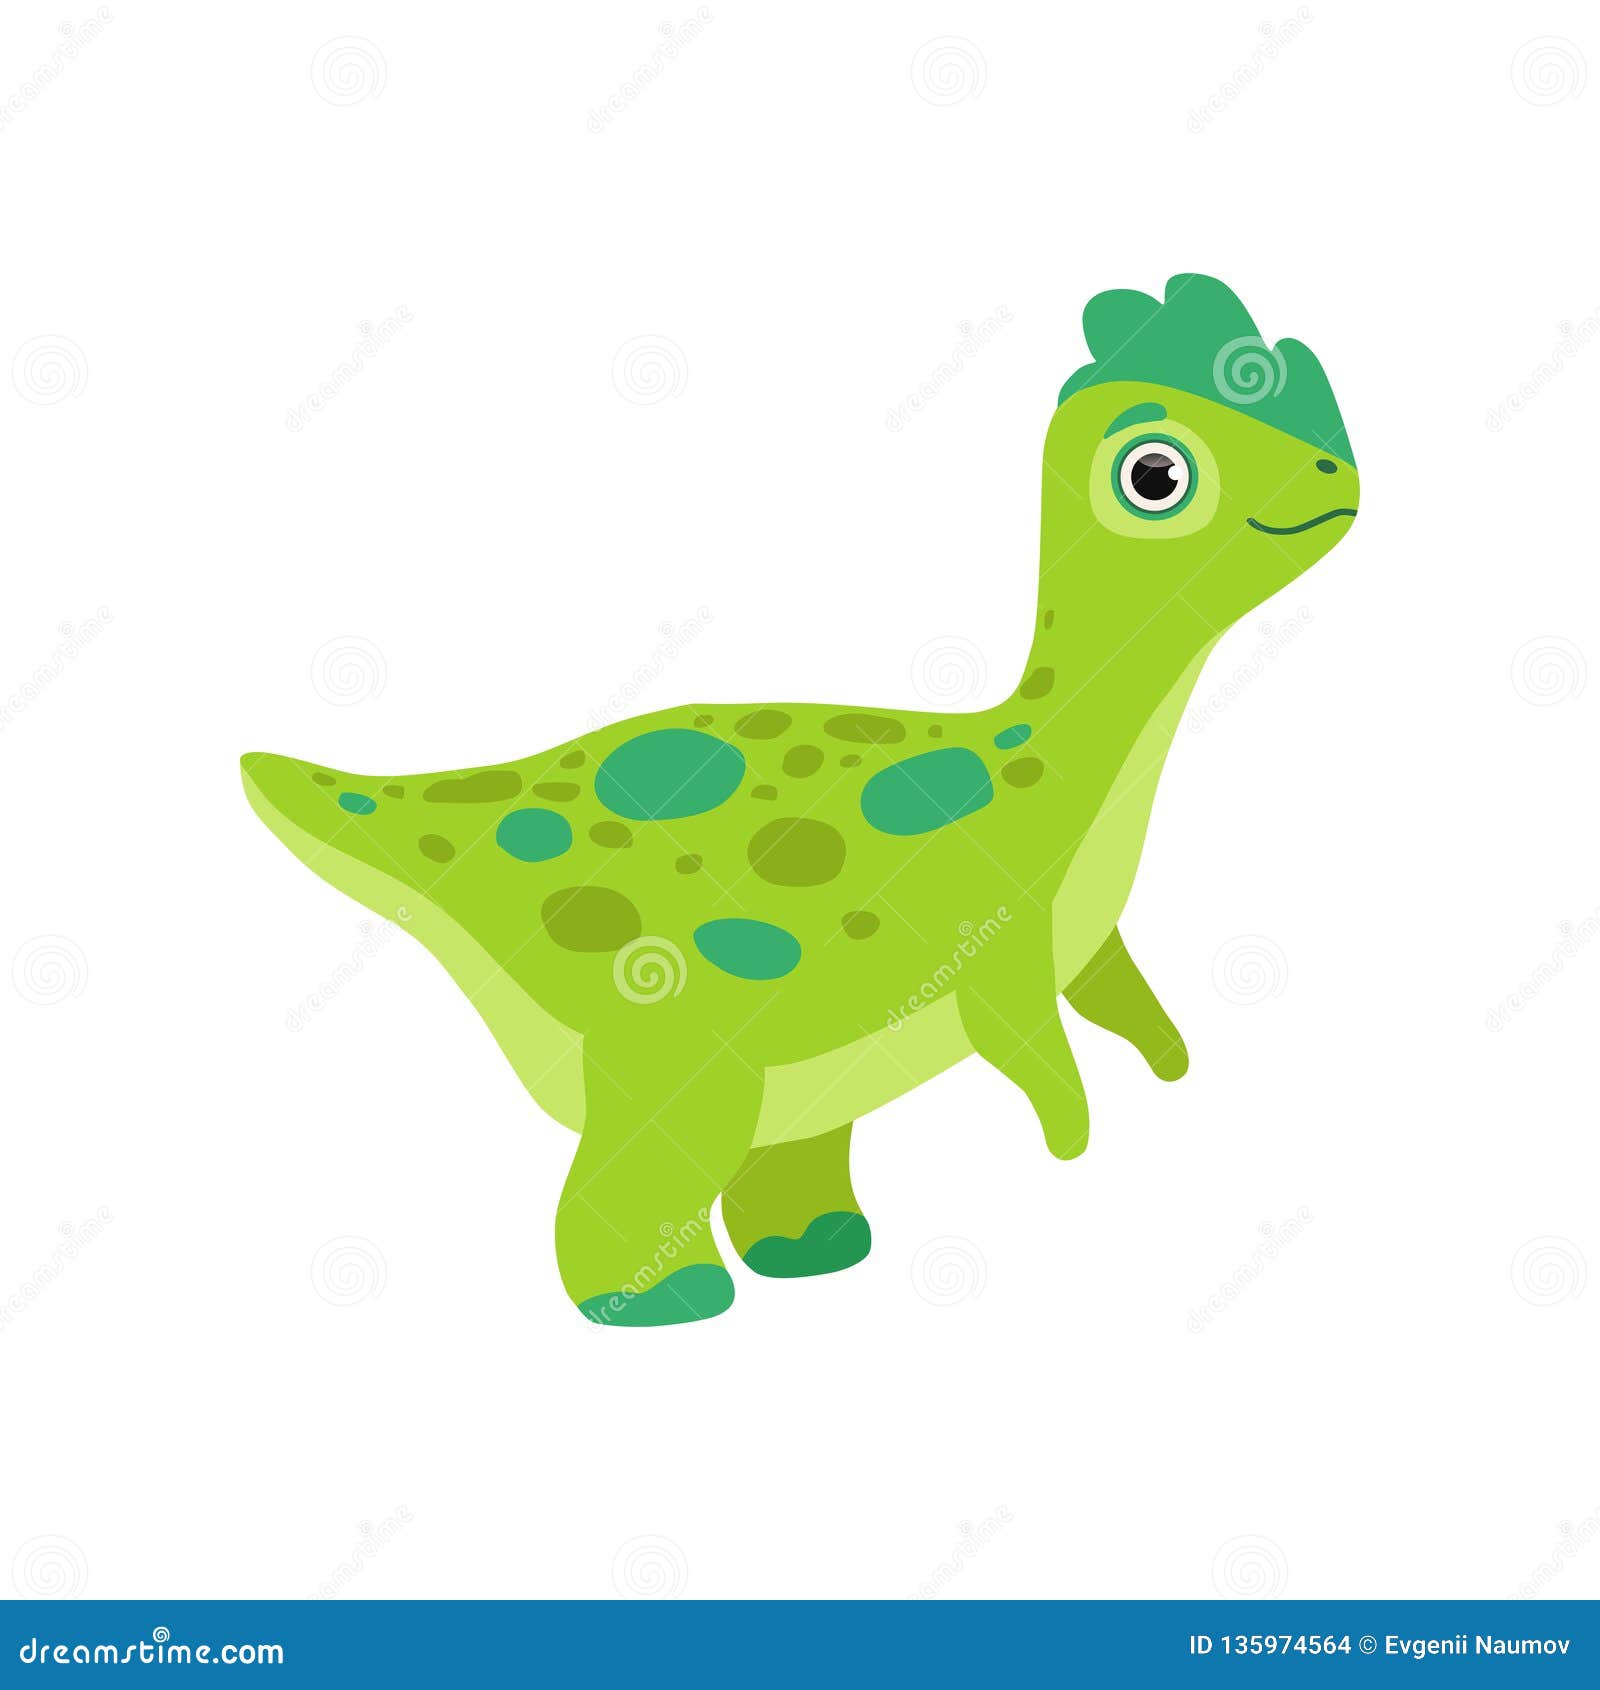 Cute Green Dinosaur, Funny Baby Dino Cartoon Character Vector Illustration  Stock Vector - Illustration of fantastic, colorful: 135974564